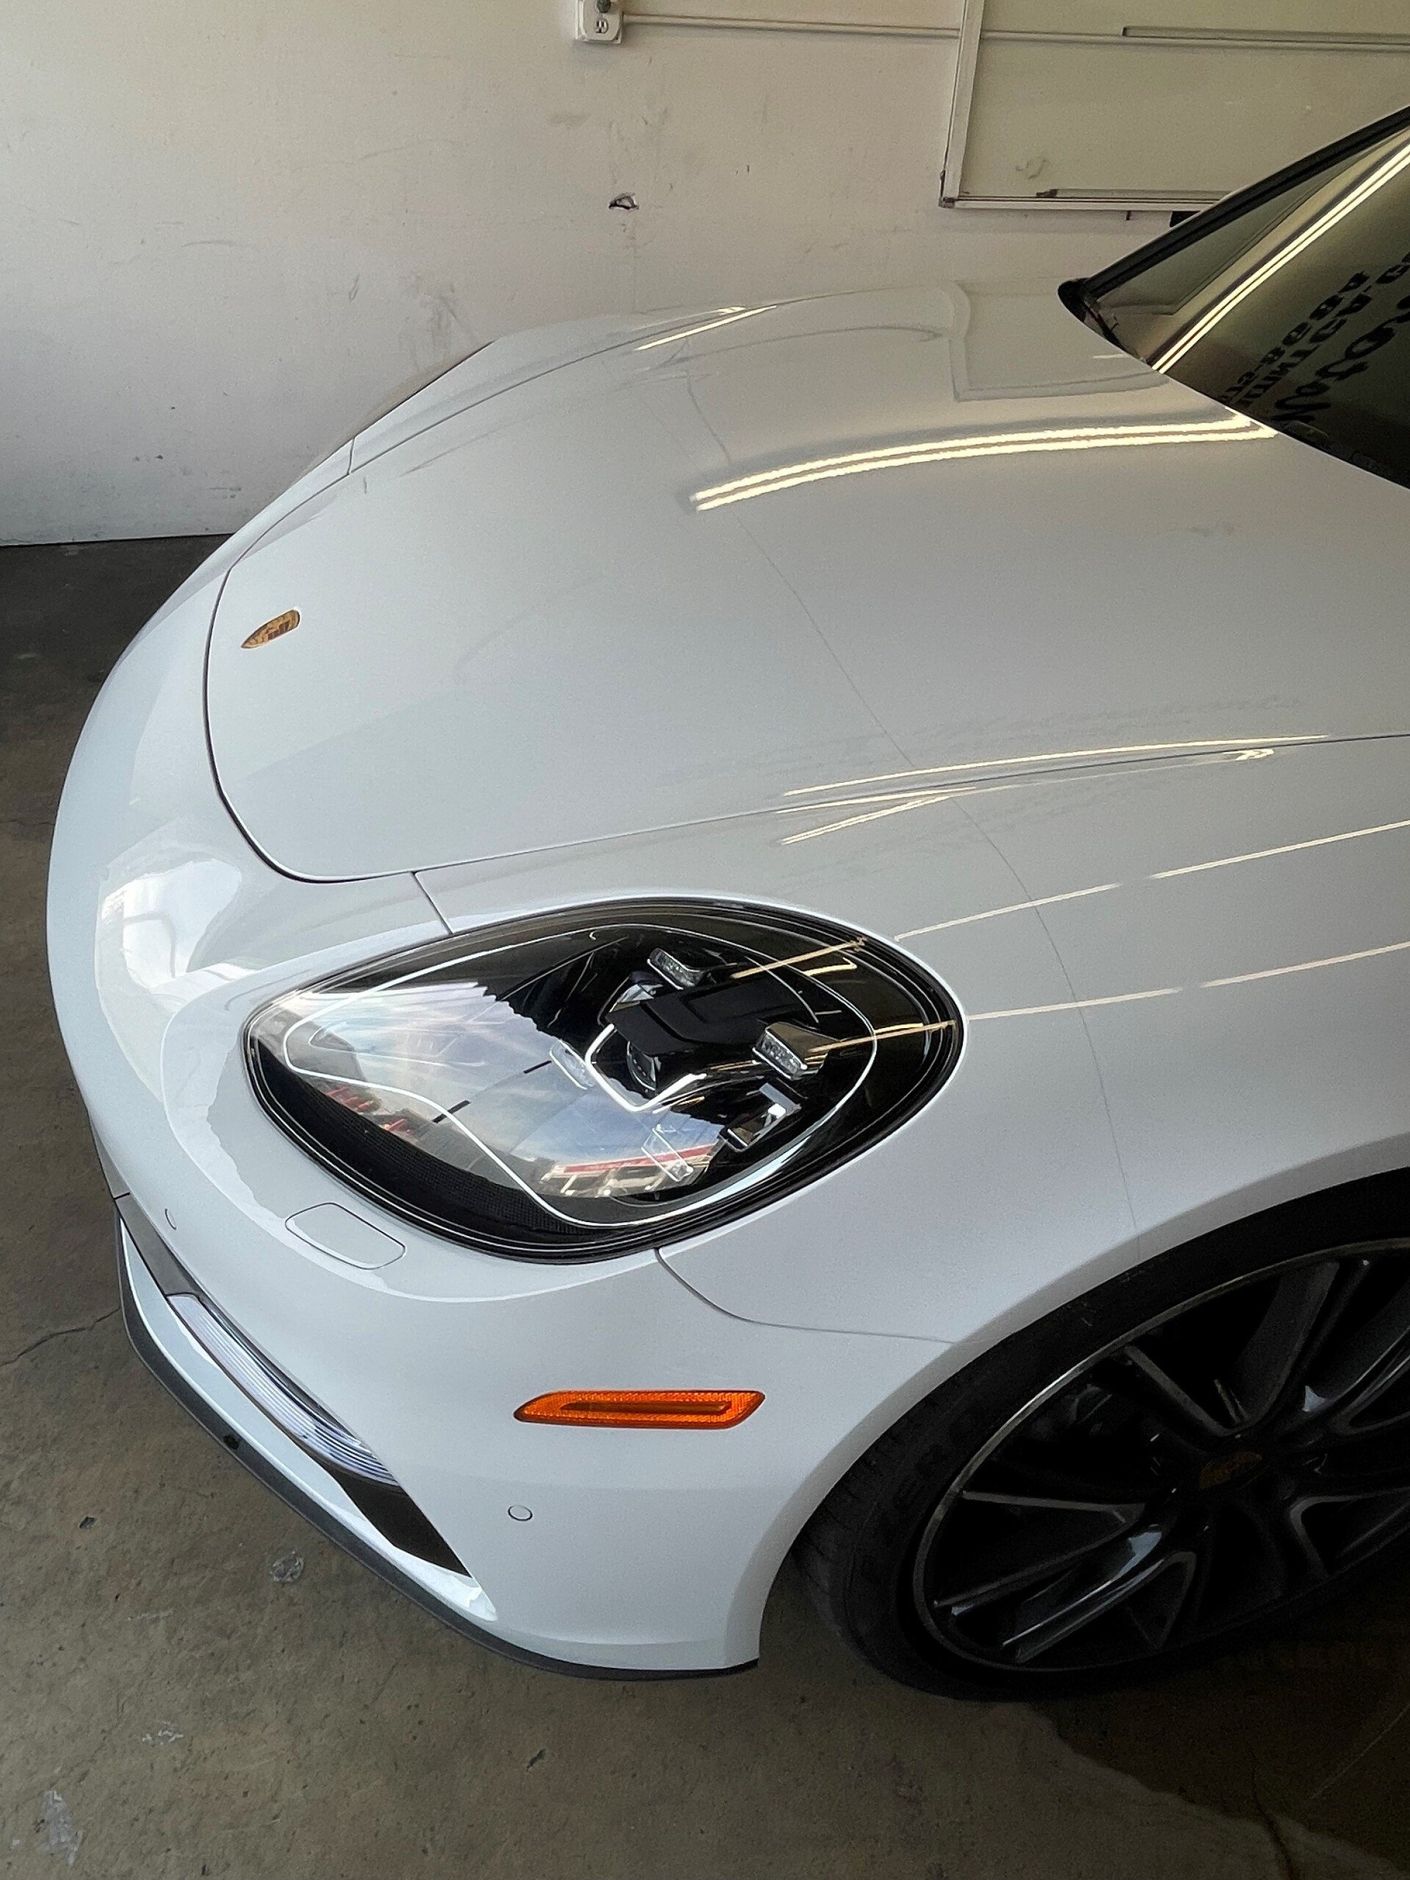 Porsche Paint Protection Film | Upland, CA | The SoCal Auto Salon